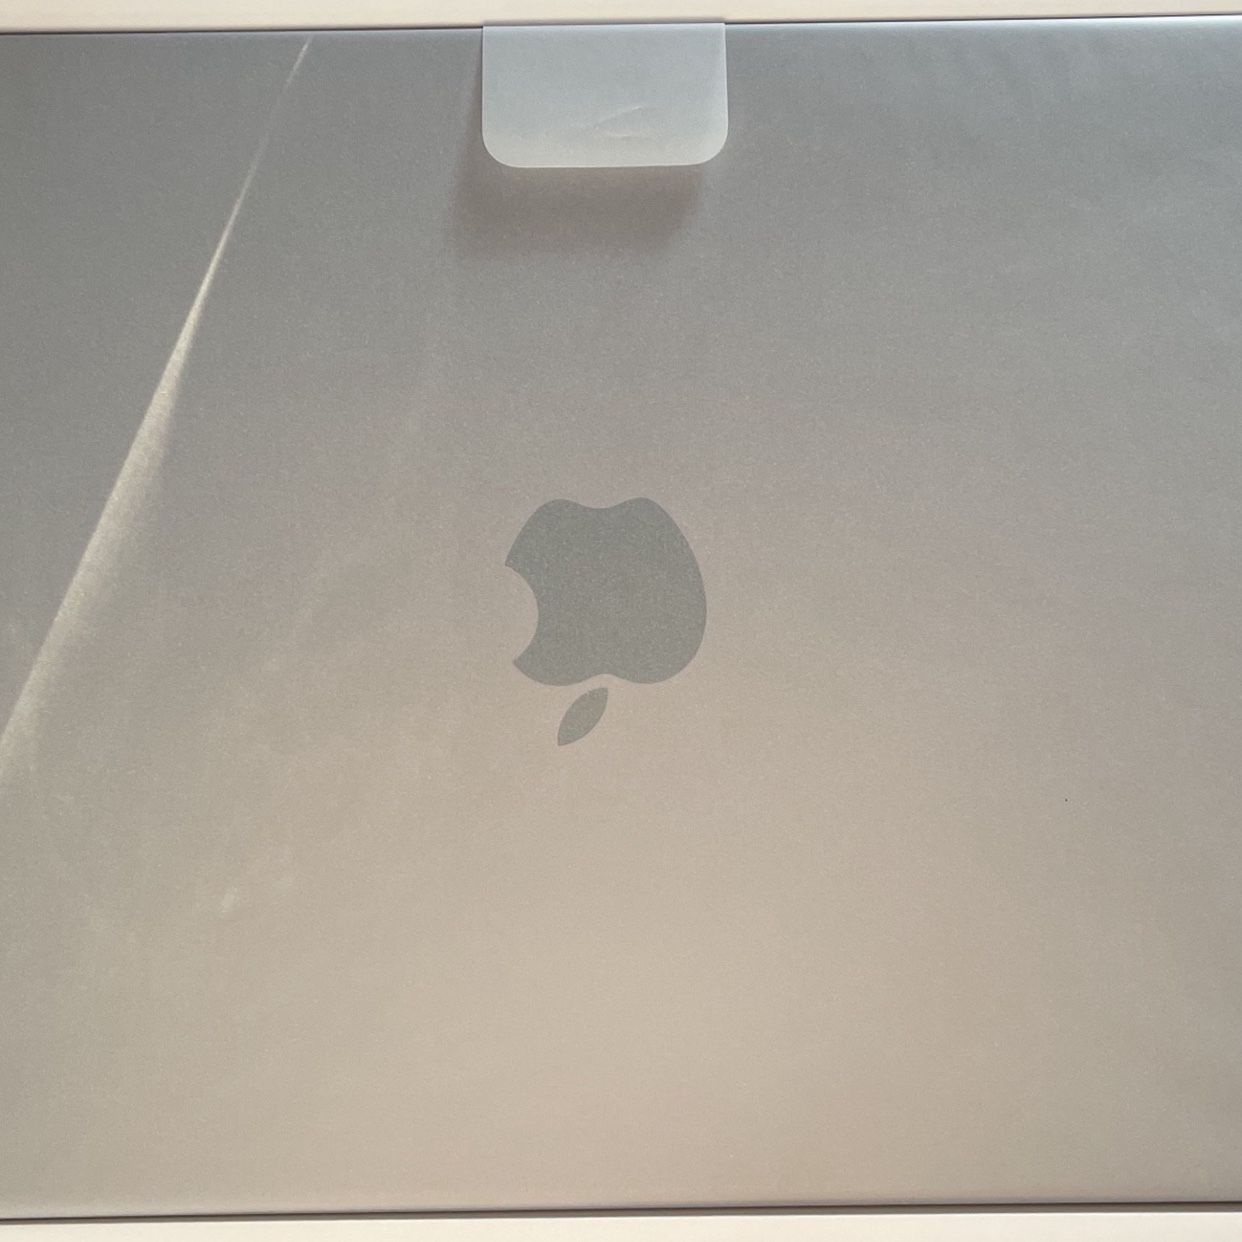 2023 14 inch Macbook Pro, brand new